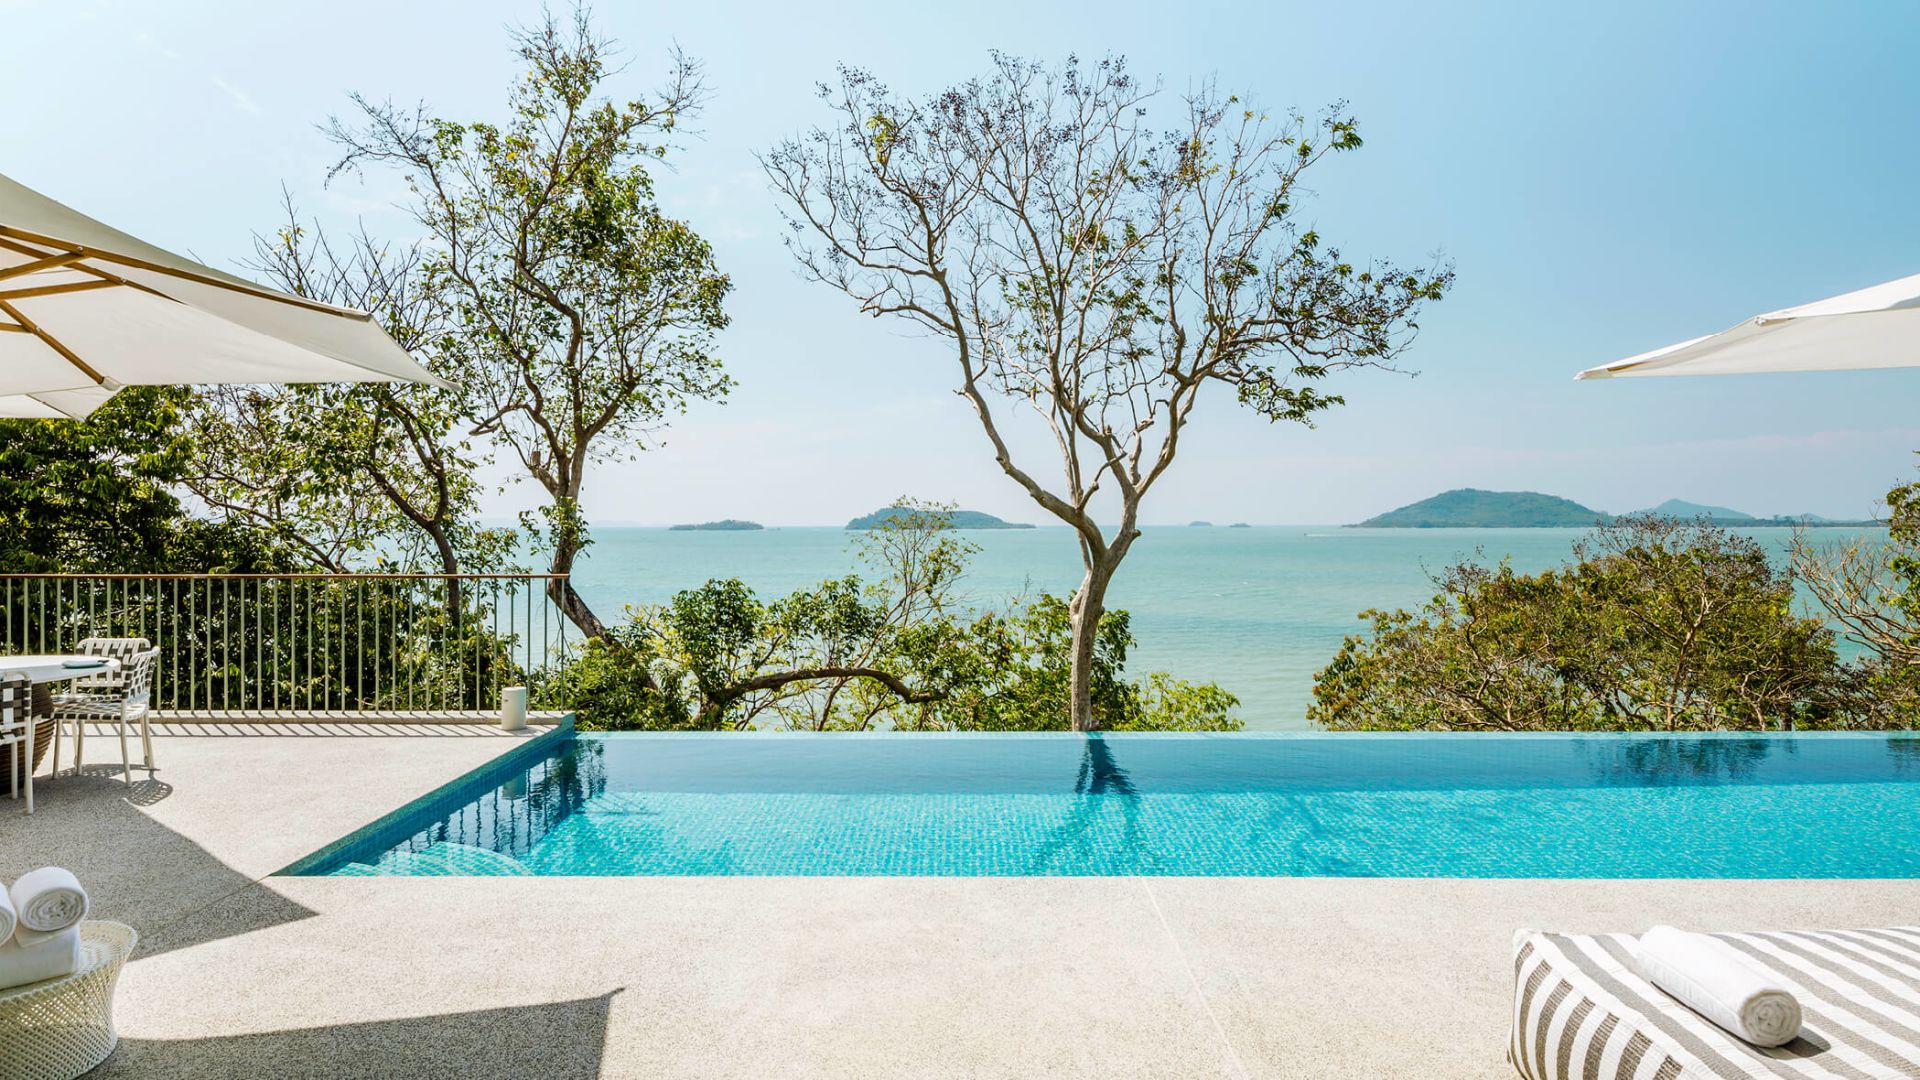 Pool overlooking the Andaman Sea - Image